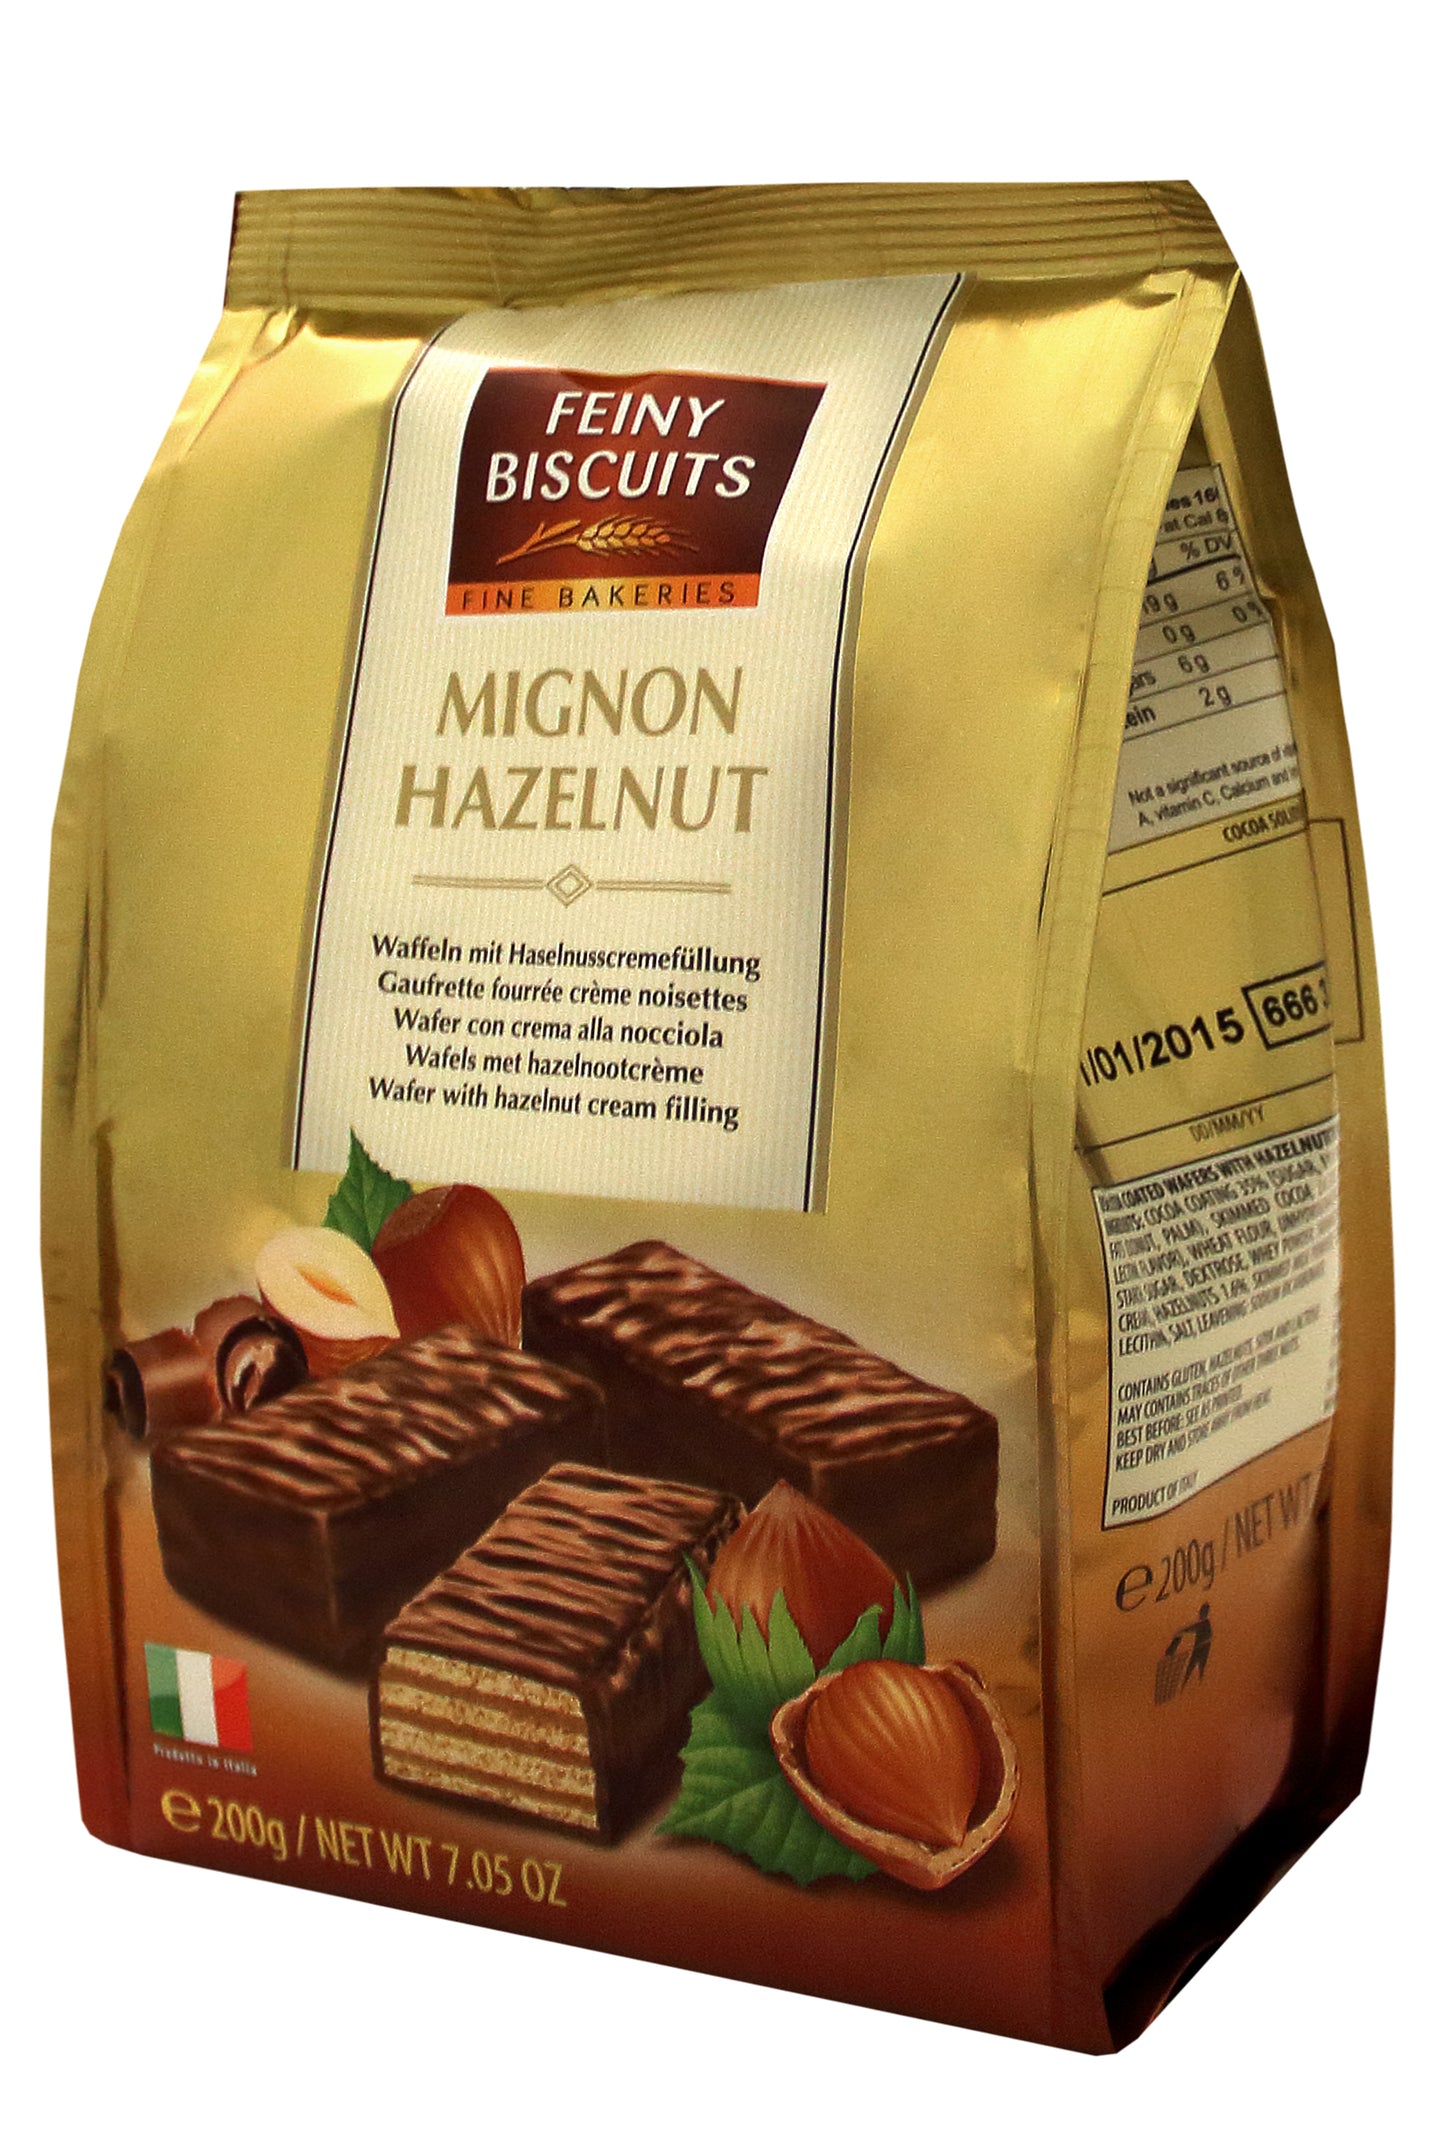 Feiny Biscuits Mignon Hazelnut Wafers, 200g